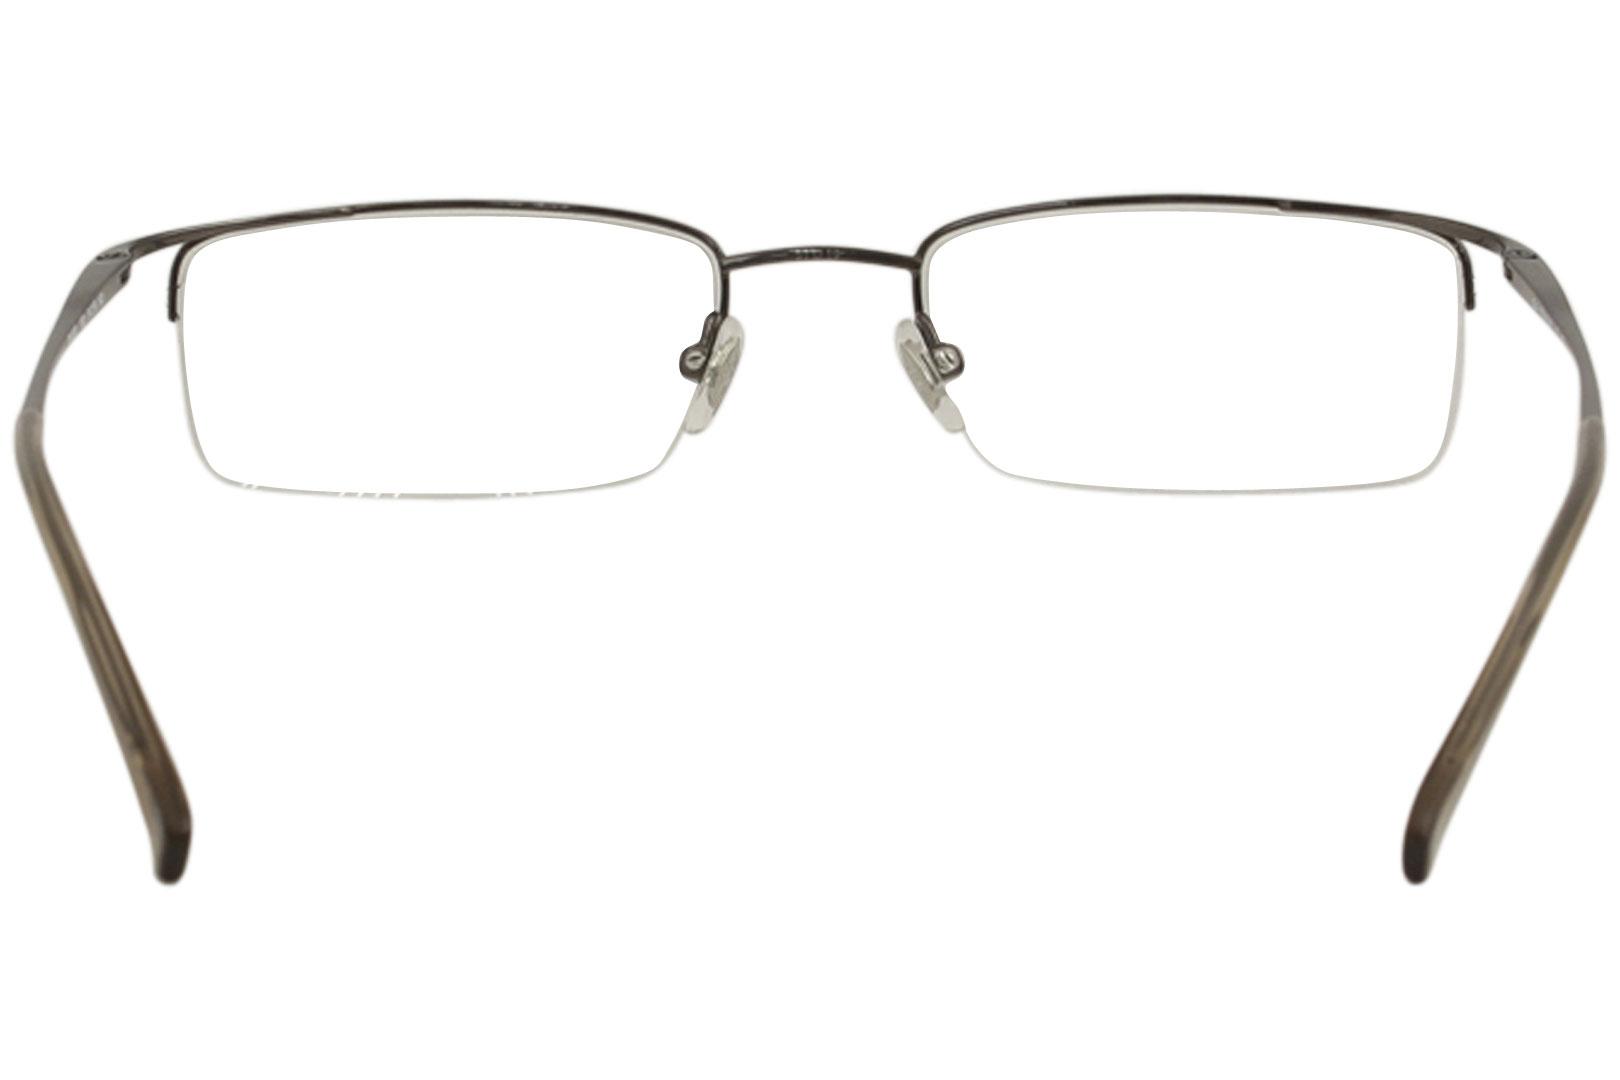 Ray Ban Men S Eyeglasses Rx8582 Rx 8582 Rayban Half Rim Titanium Optical Frame